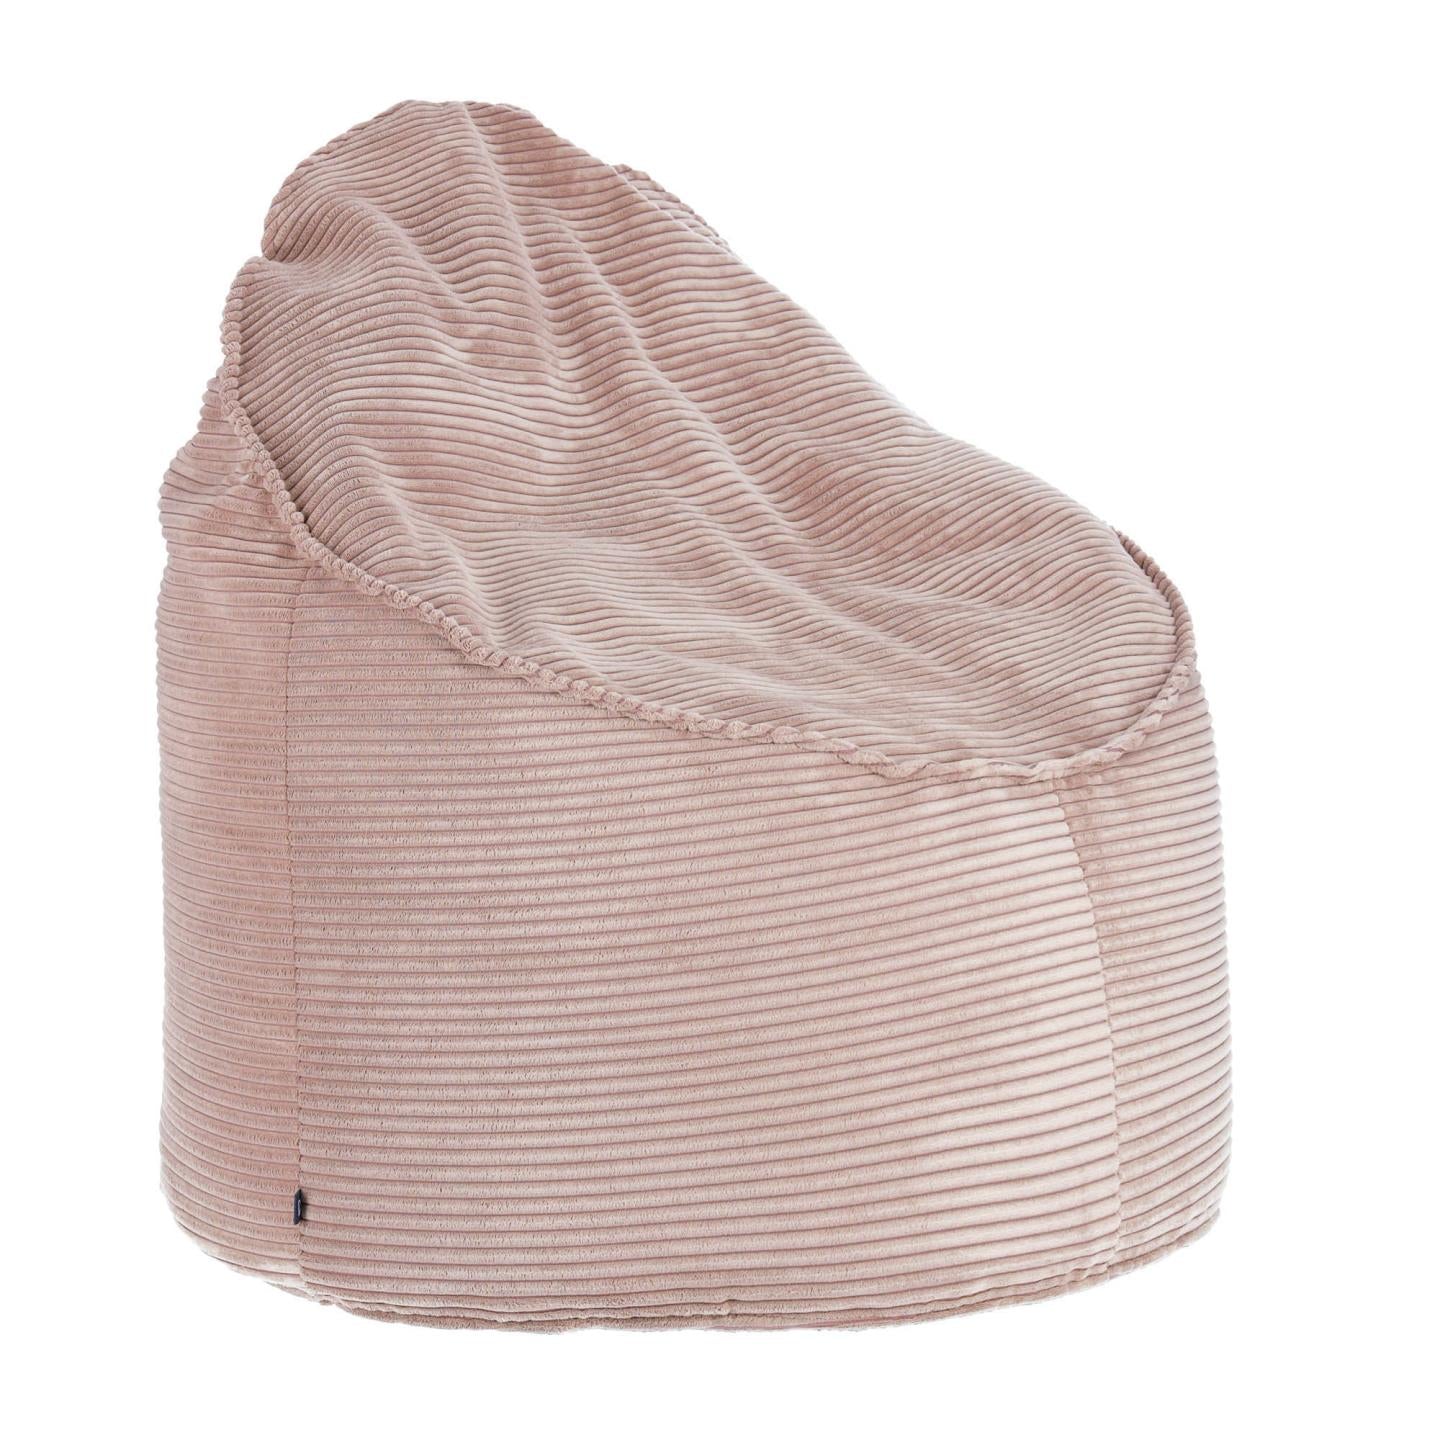 Wilma pouffe in pink wide seam corduroy, Ø 80 cm